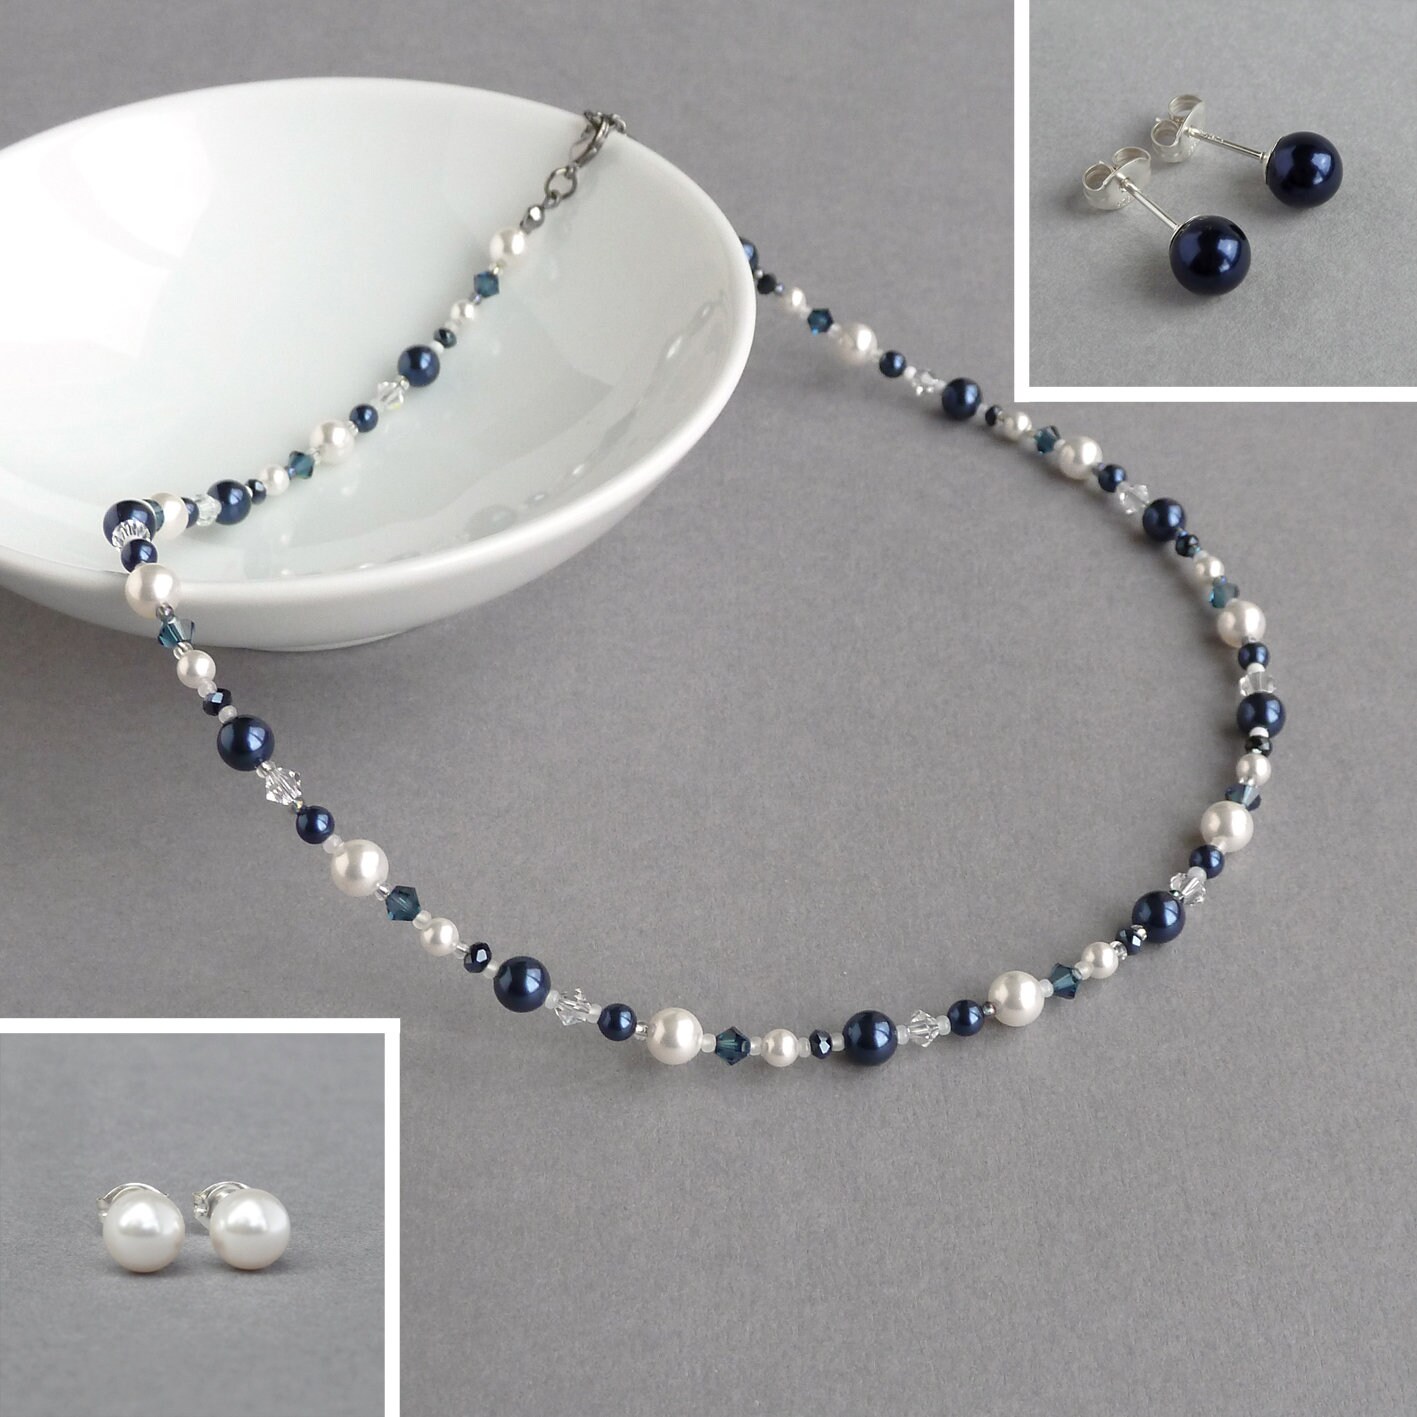 8-9mm Genuine Natural Dark Blue Freshwater Cultured Baroque Pearl Necklace  30-75 | eBay